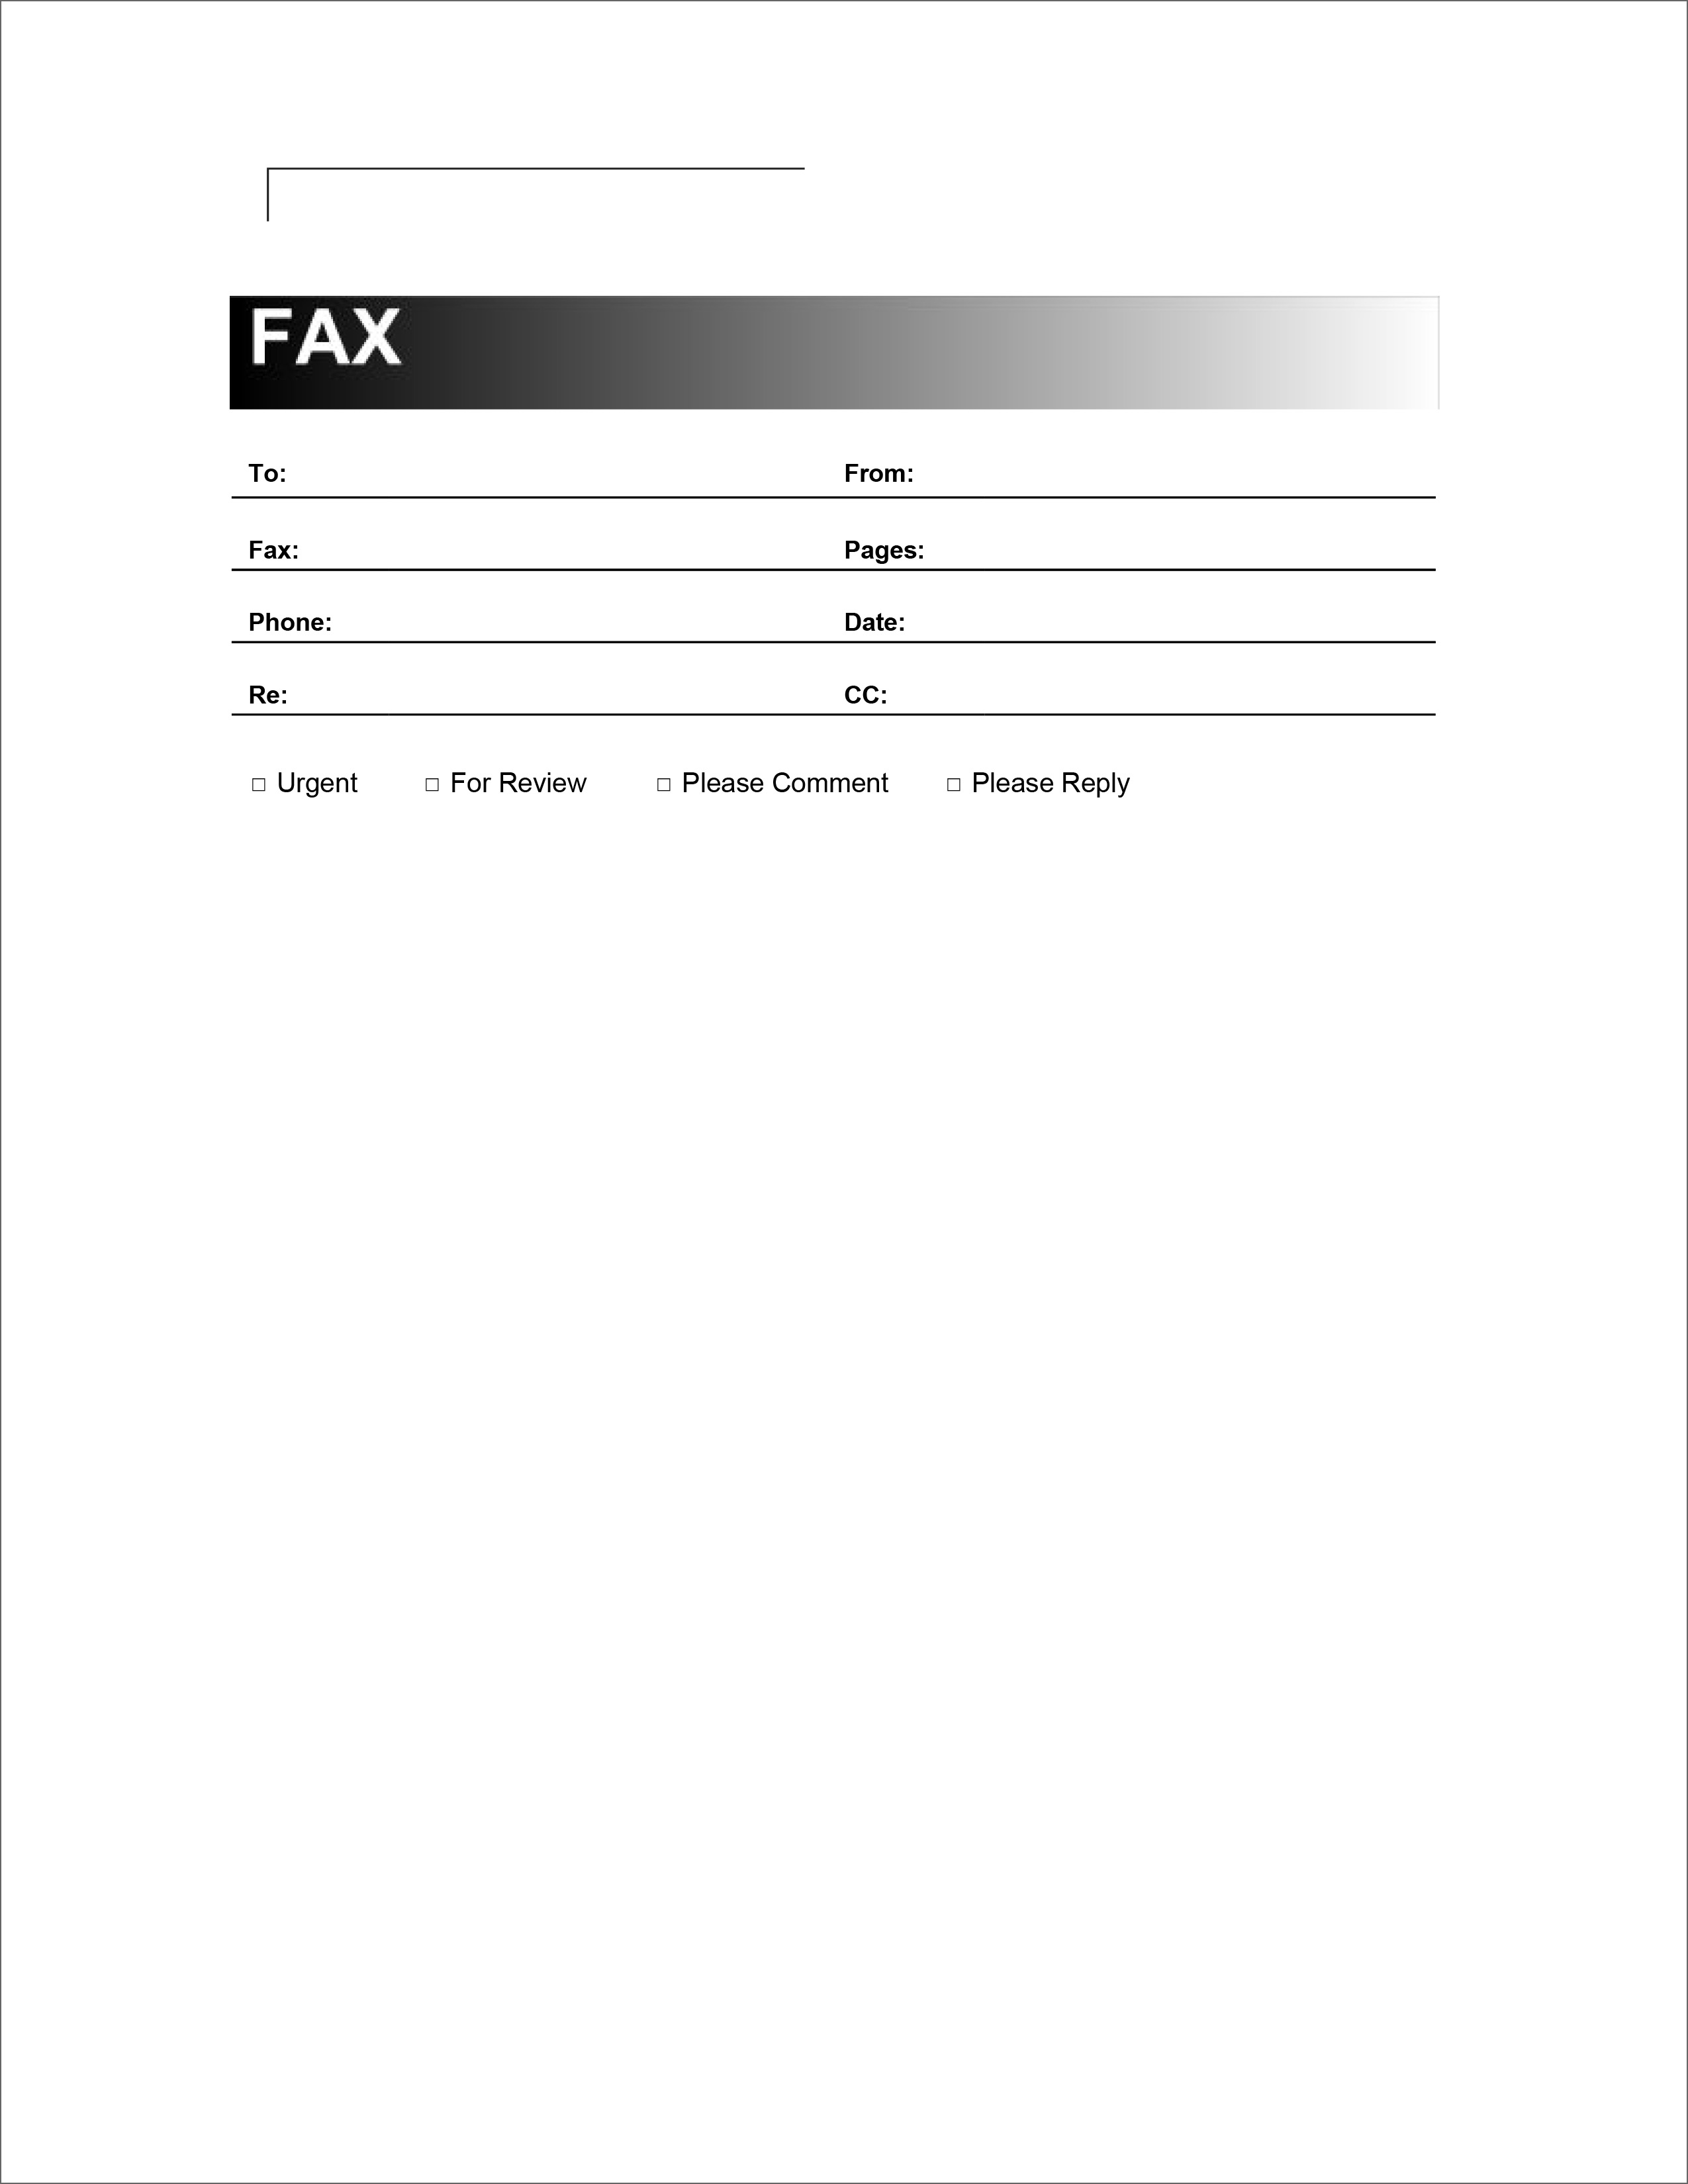 20-fax-template-doctemplates